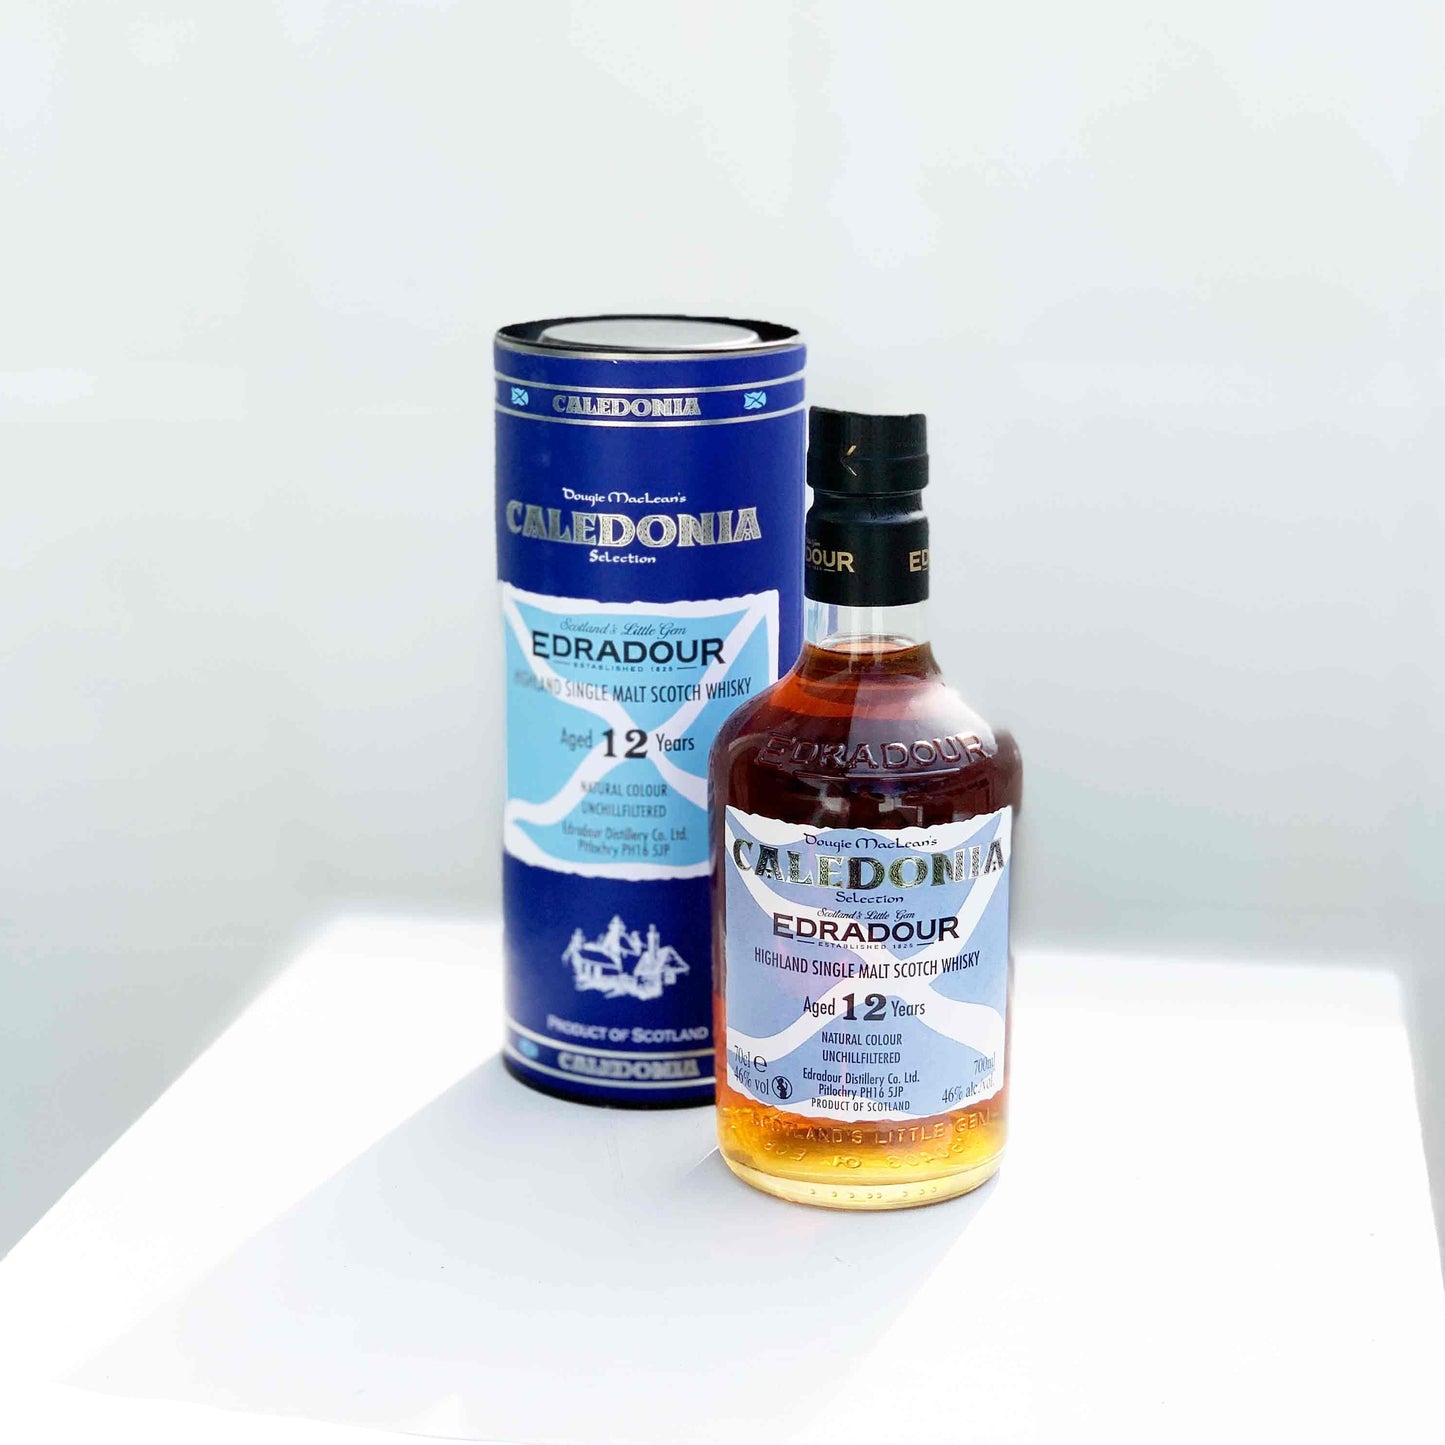 Edradour Caledonia Selection 12 Year Old Single Malt Scotch Whisky